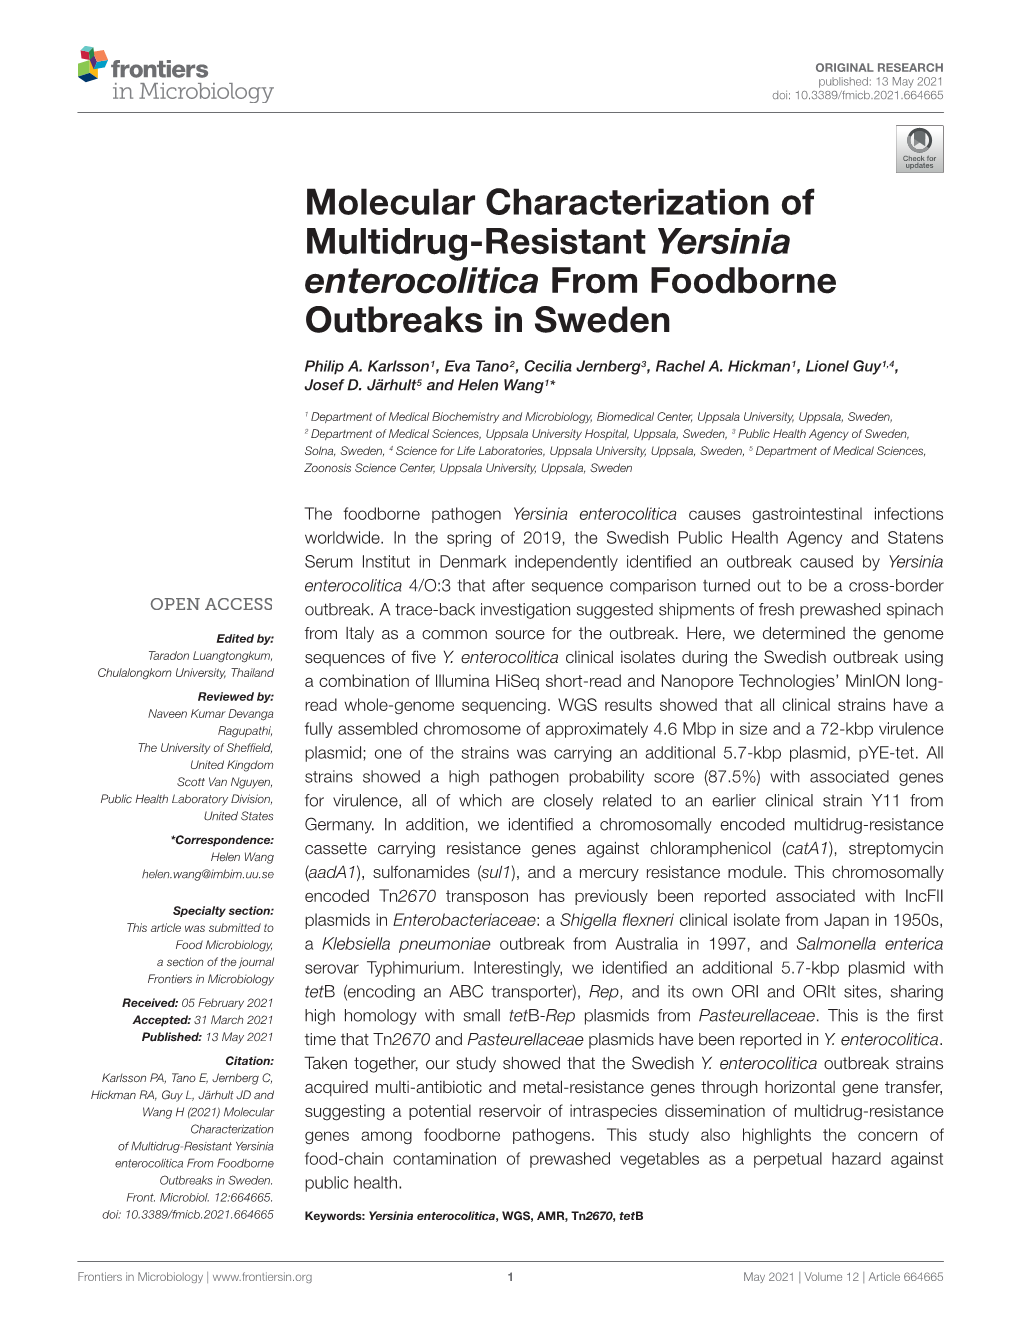 Molecular Characterization of Multidrug-Resistant Yersinia Enterocolitica from Foodborne Outbreaks in Sweden